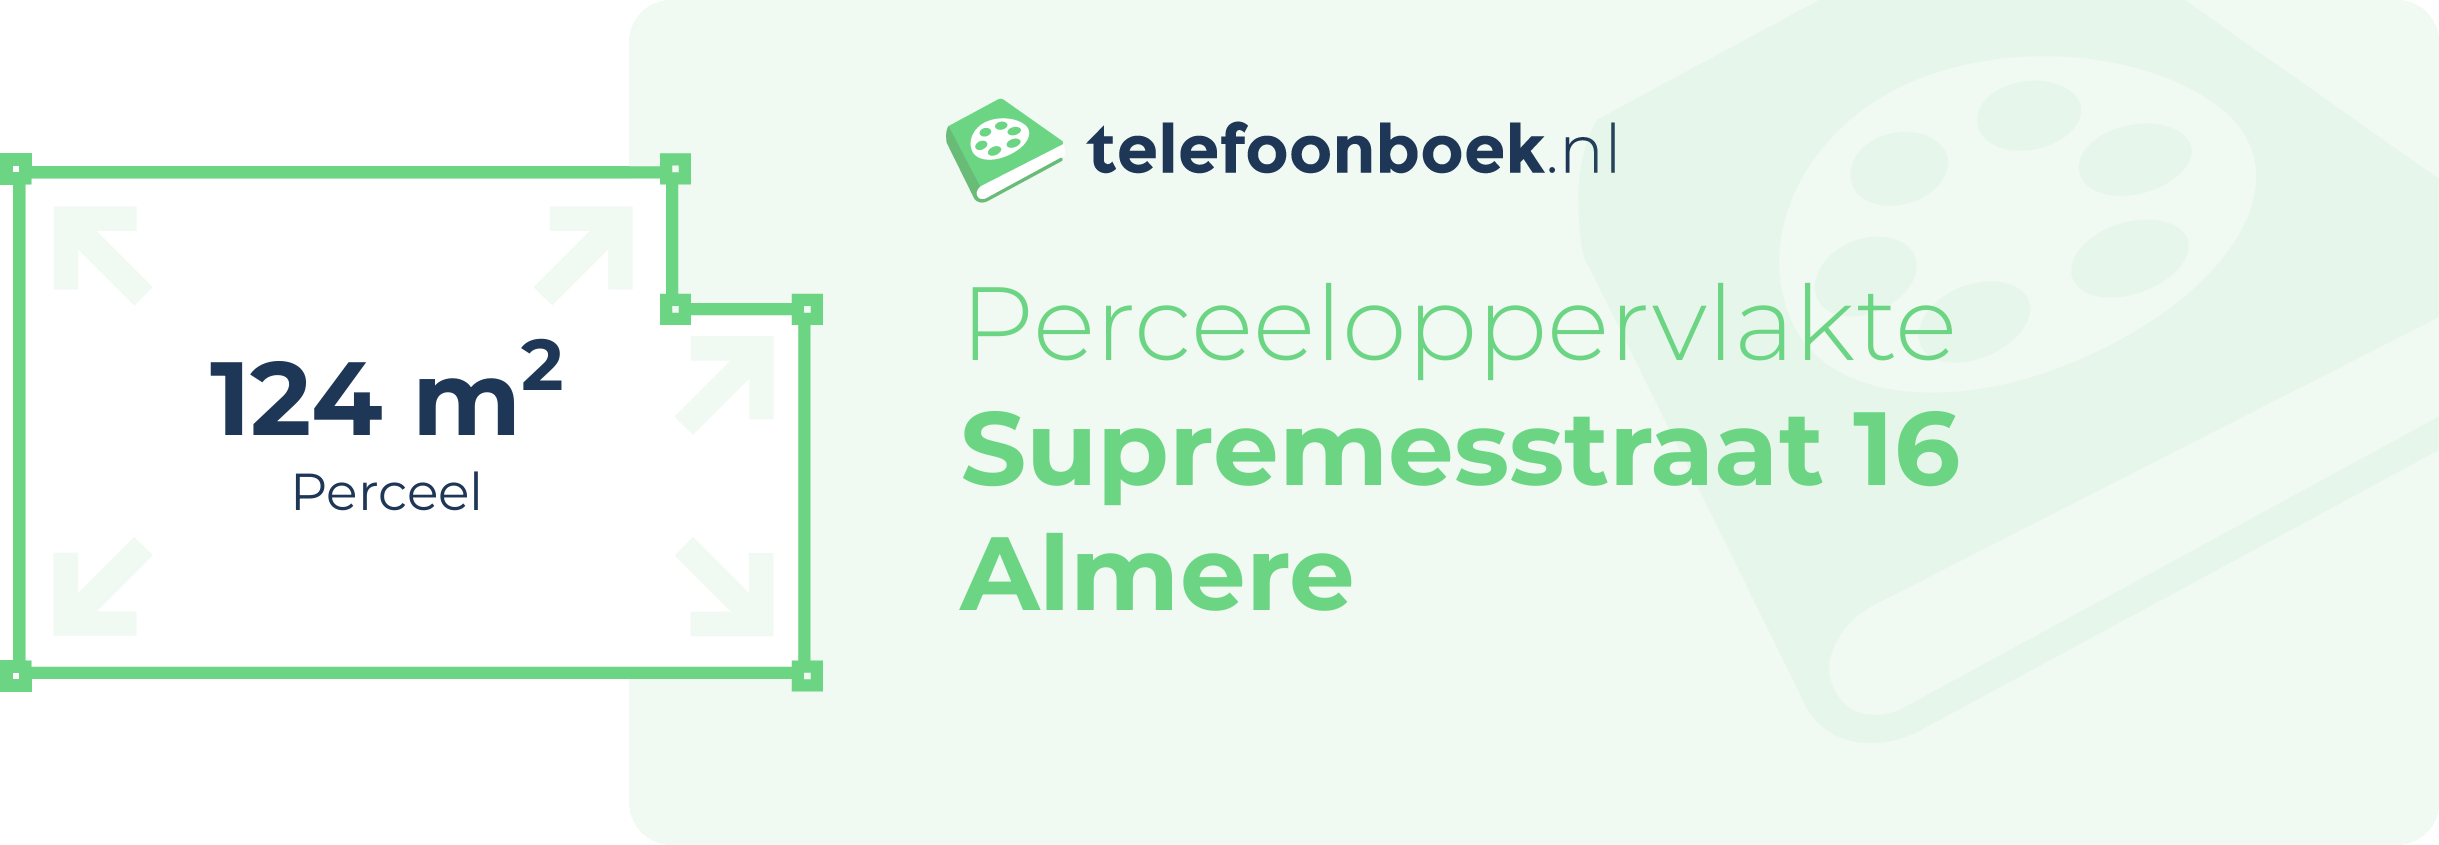 Perceeloppervlakte Supremesstraat 16 Almere